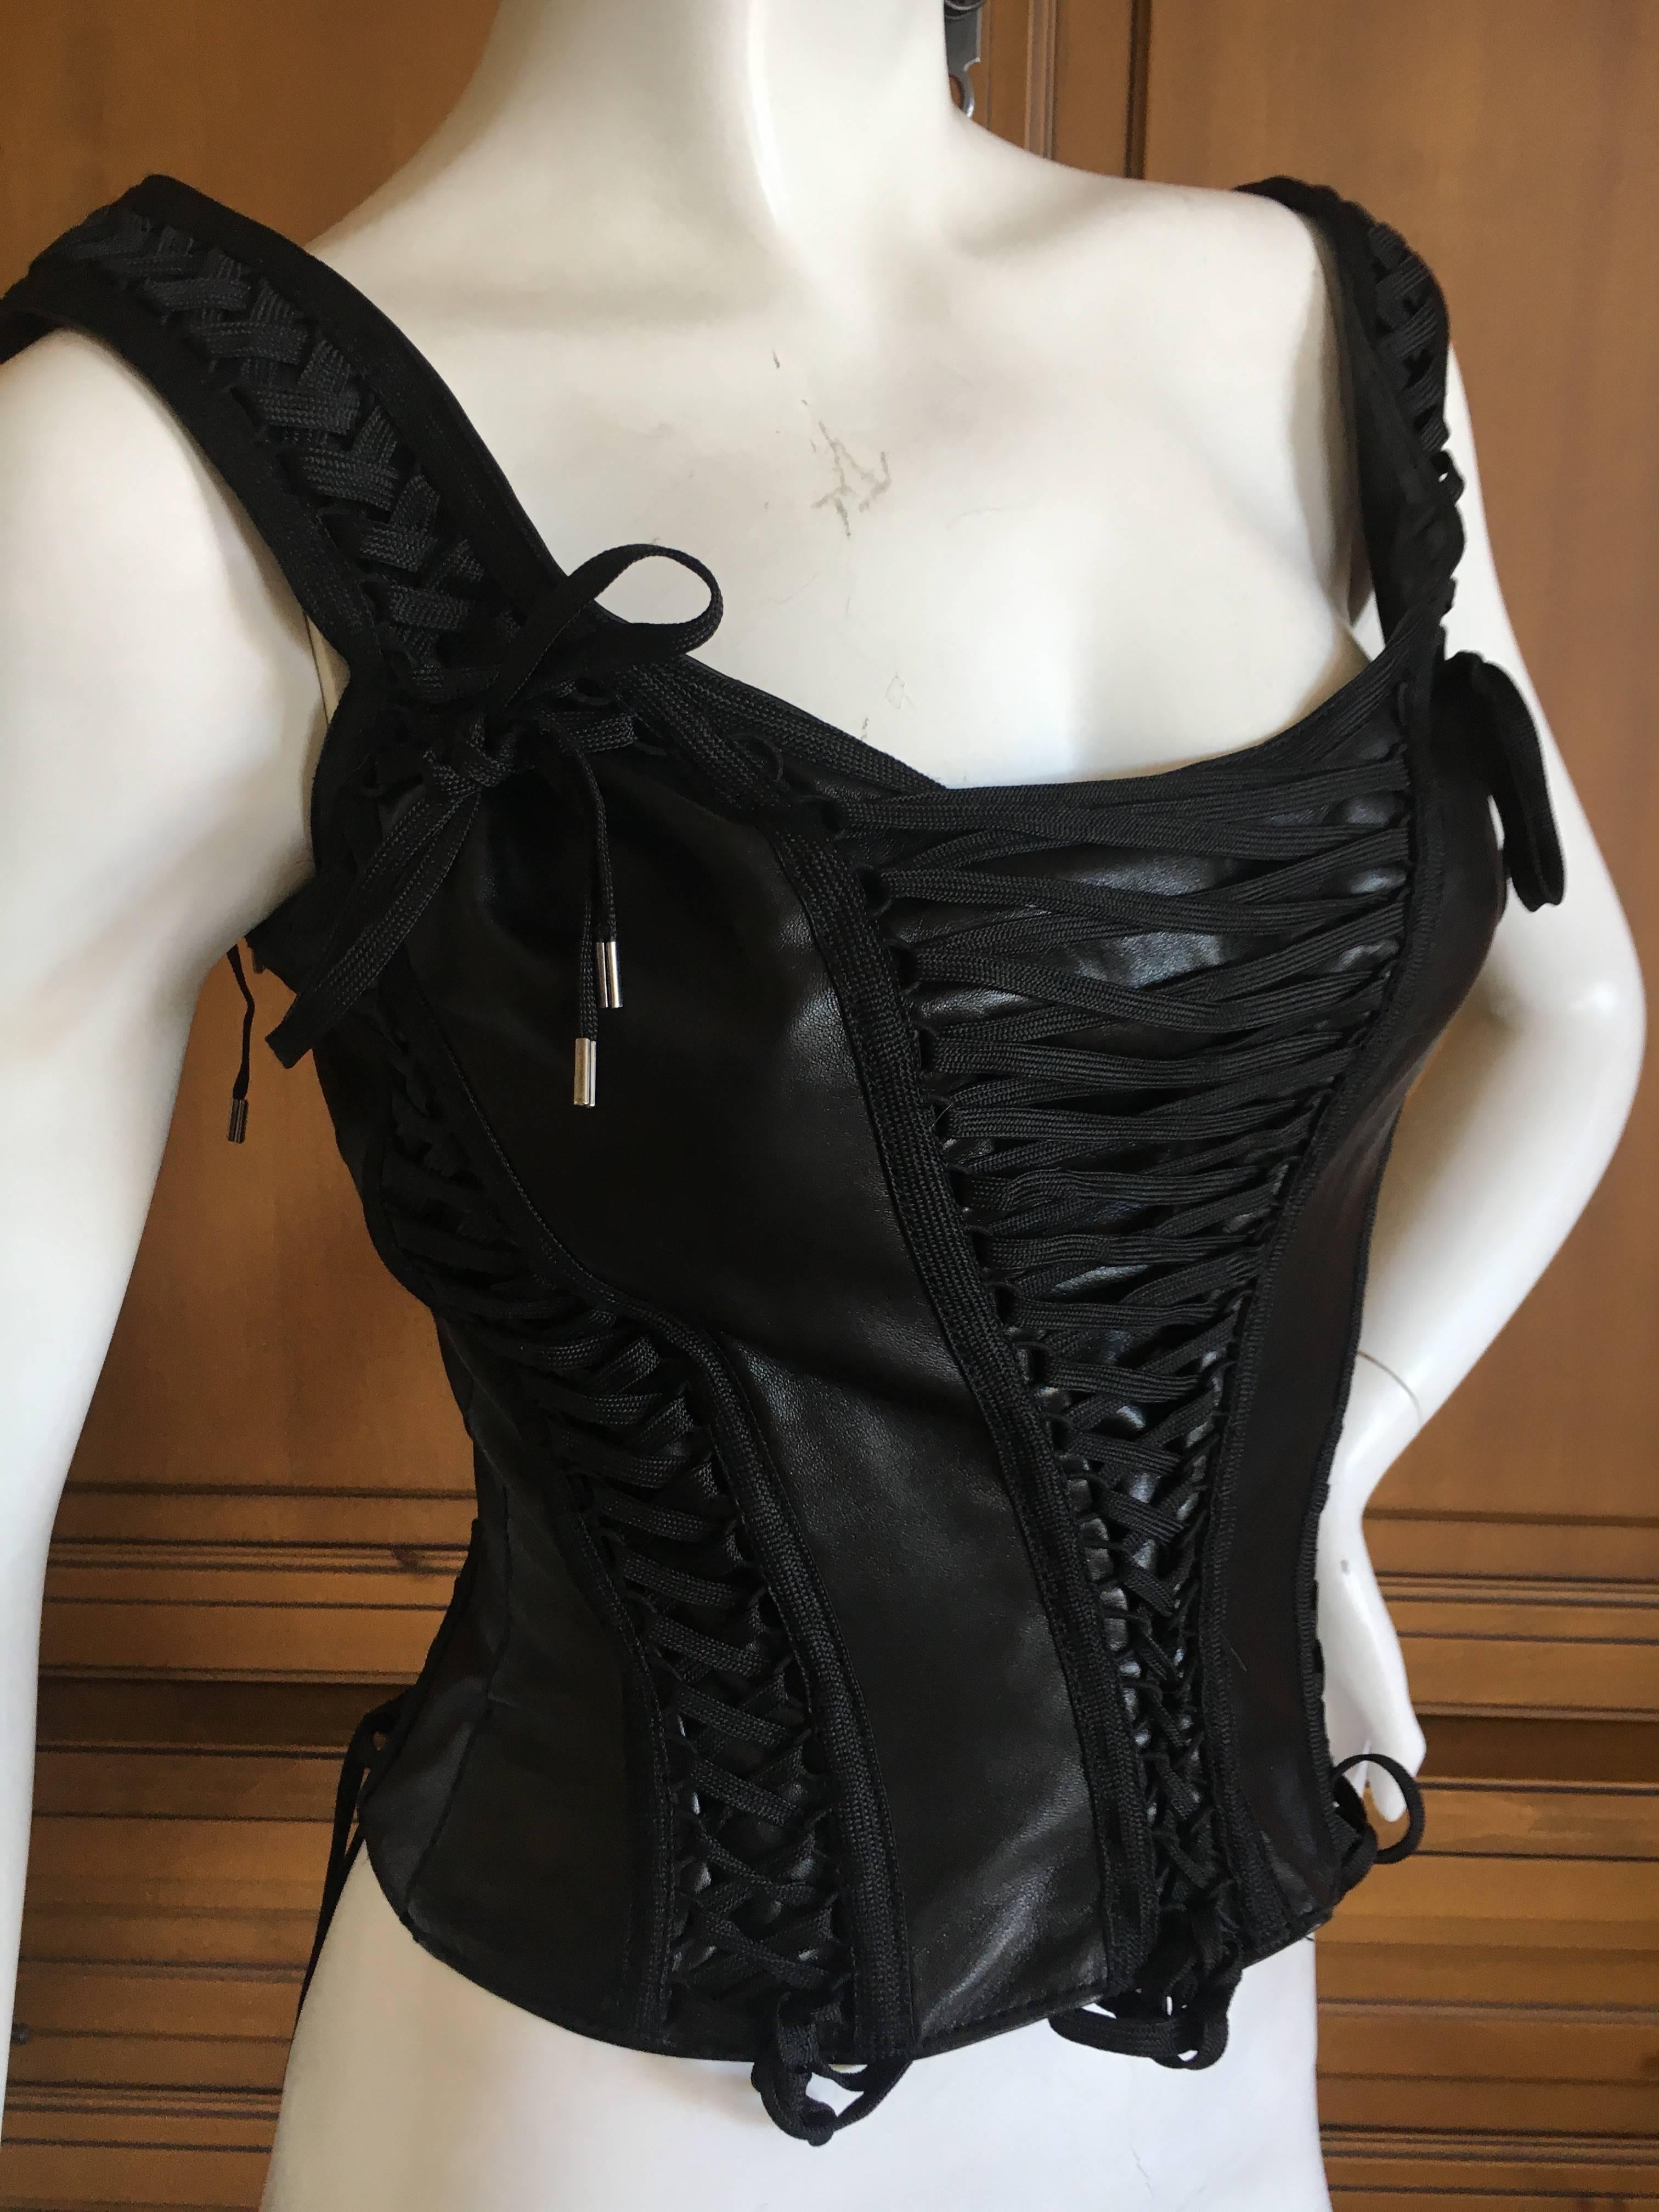 Women's Christian Dior by John Galliano Black Leather Corset Lace Bondage Sleeveless Top